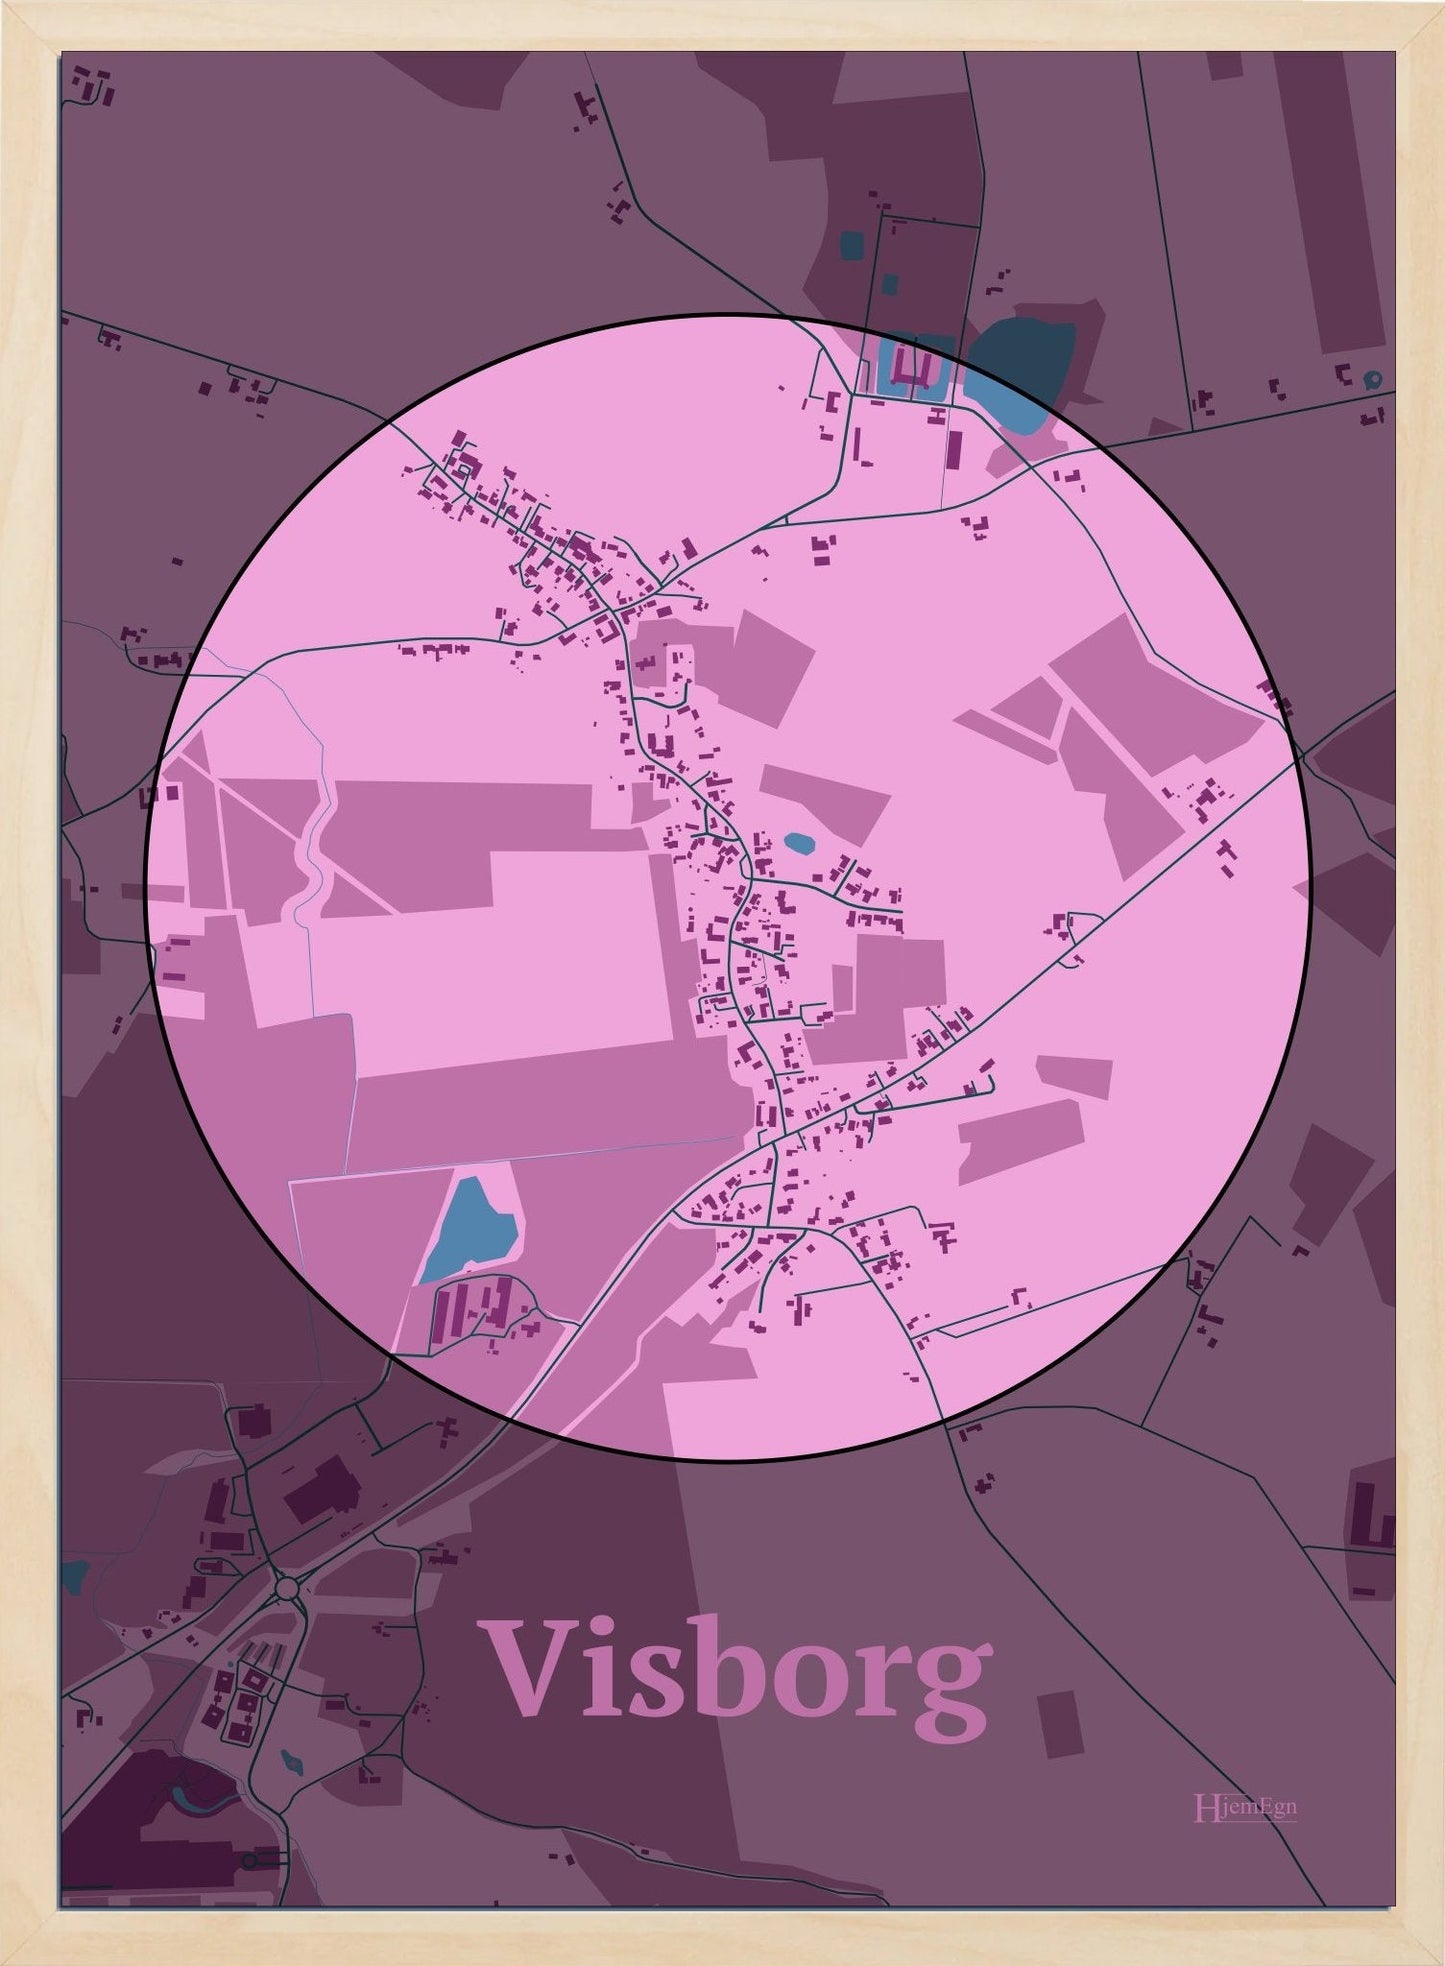 Visborg plakat i farve pastel rød og HjemEgn.dk design centrum. Design bykort for Visborg